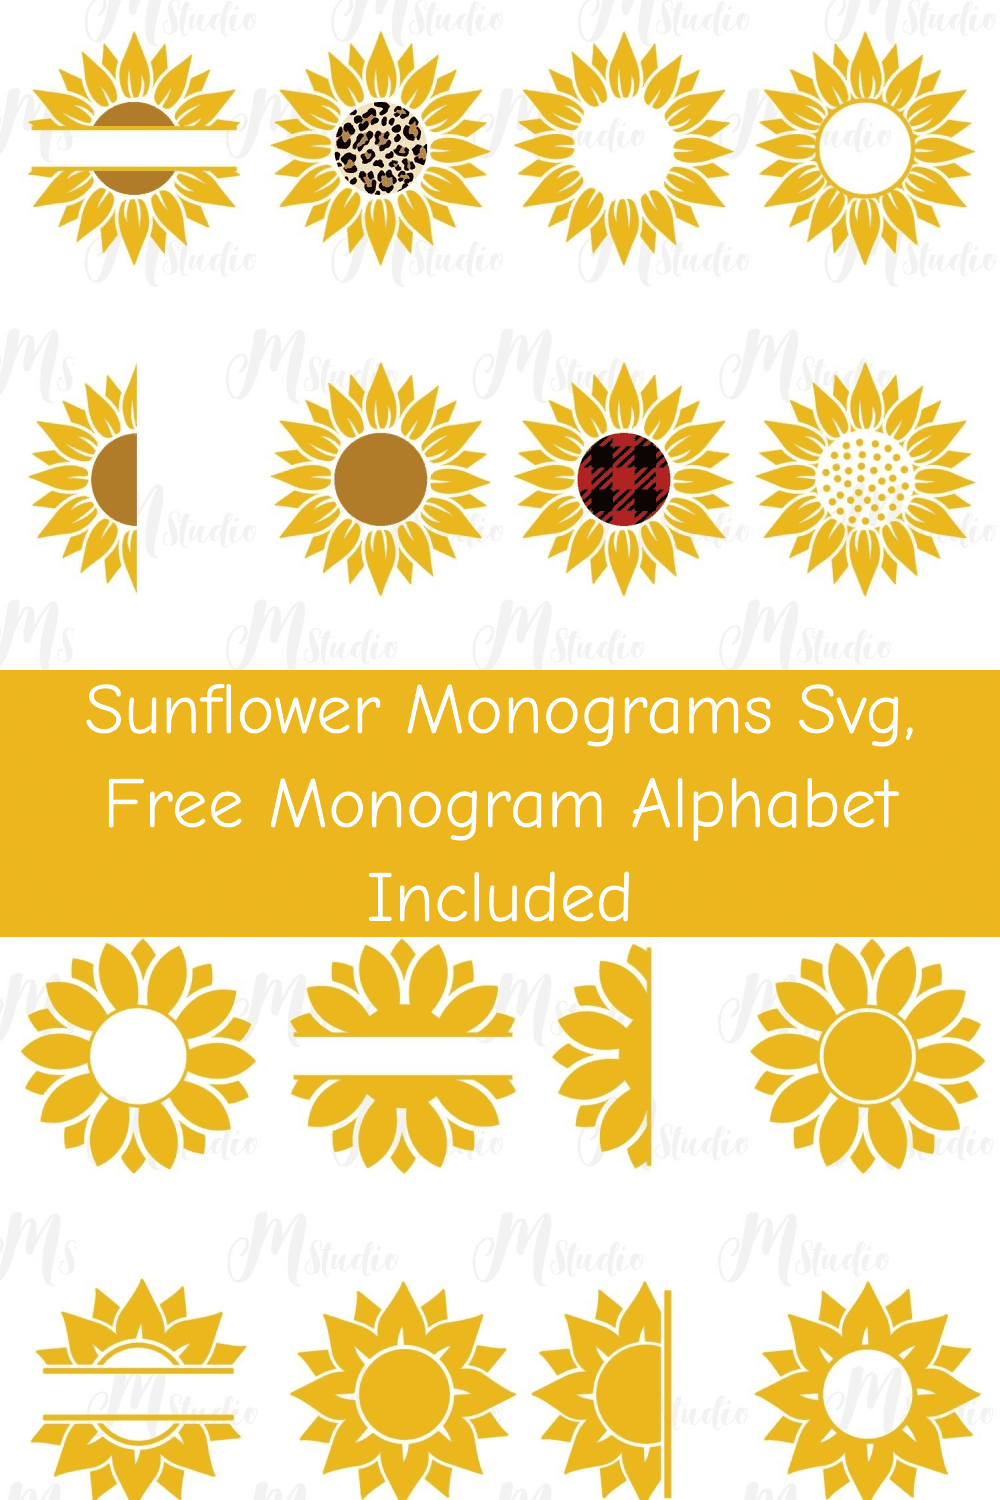 03 sunflower monograms svg free monogram alphabet included pinterest